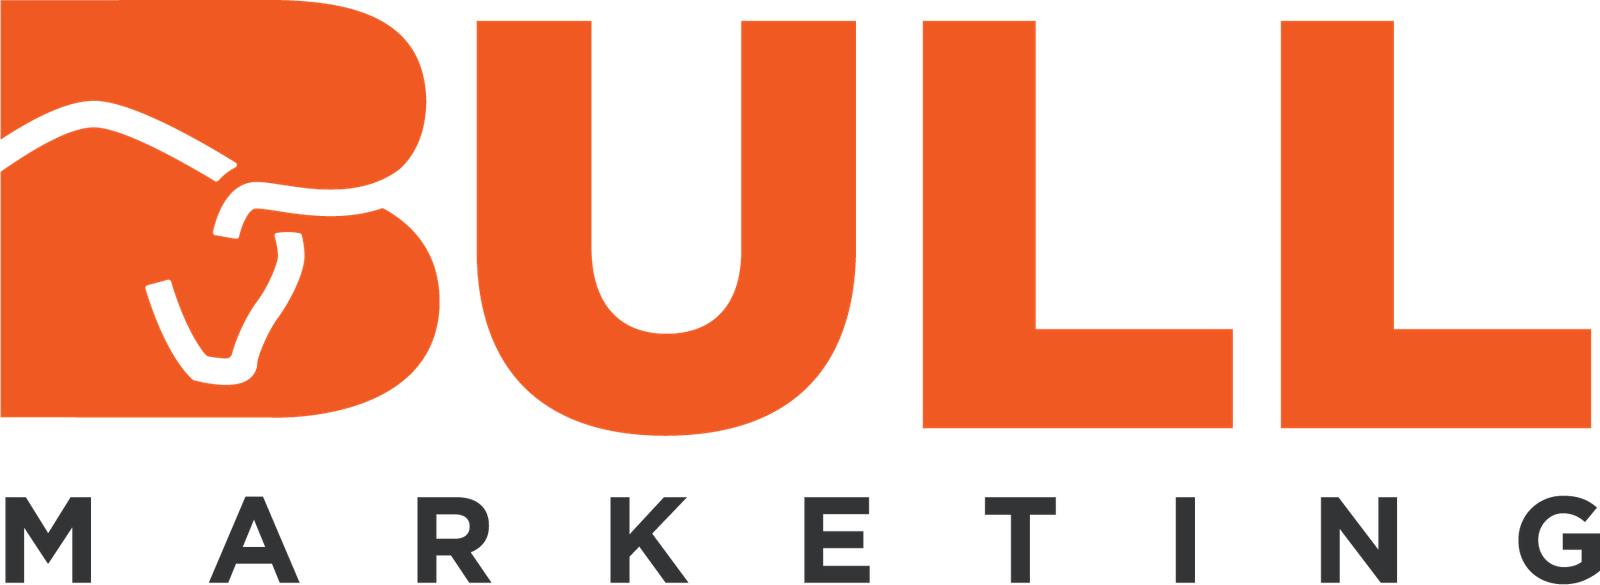 Logo bull negro_2